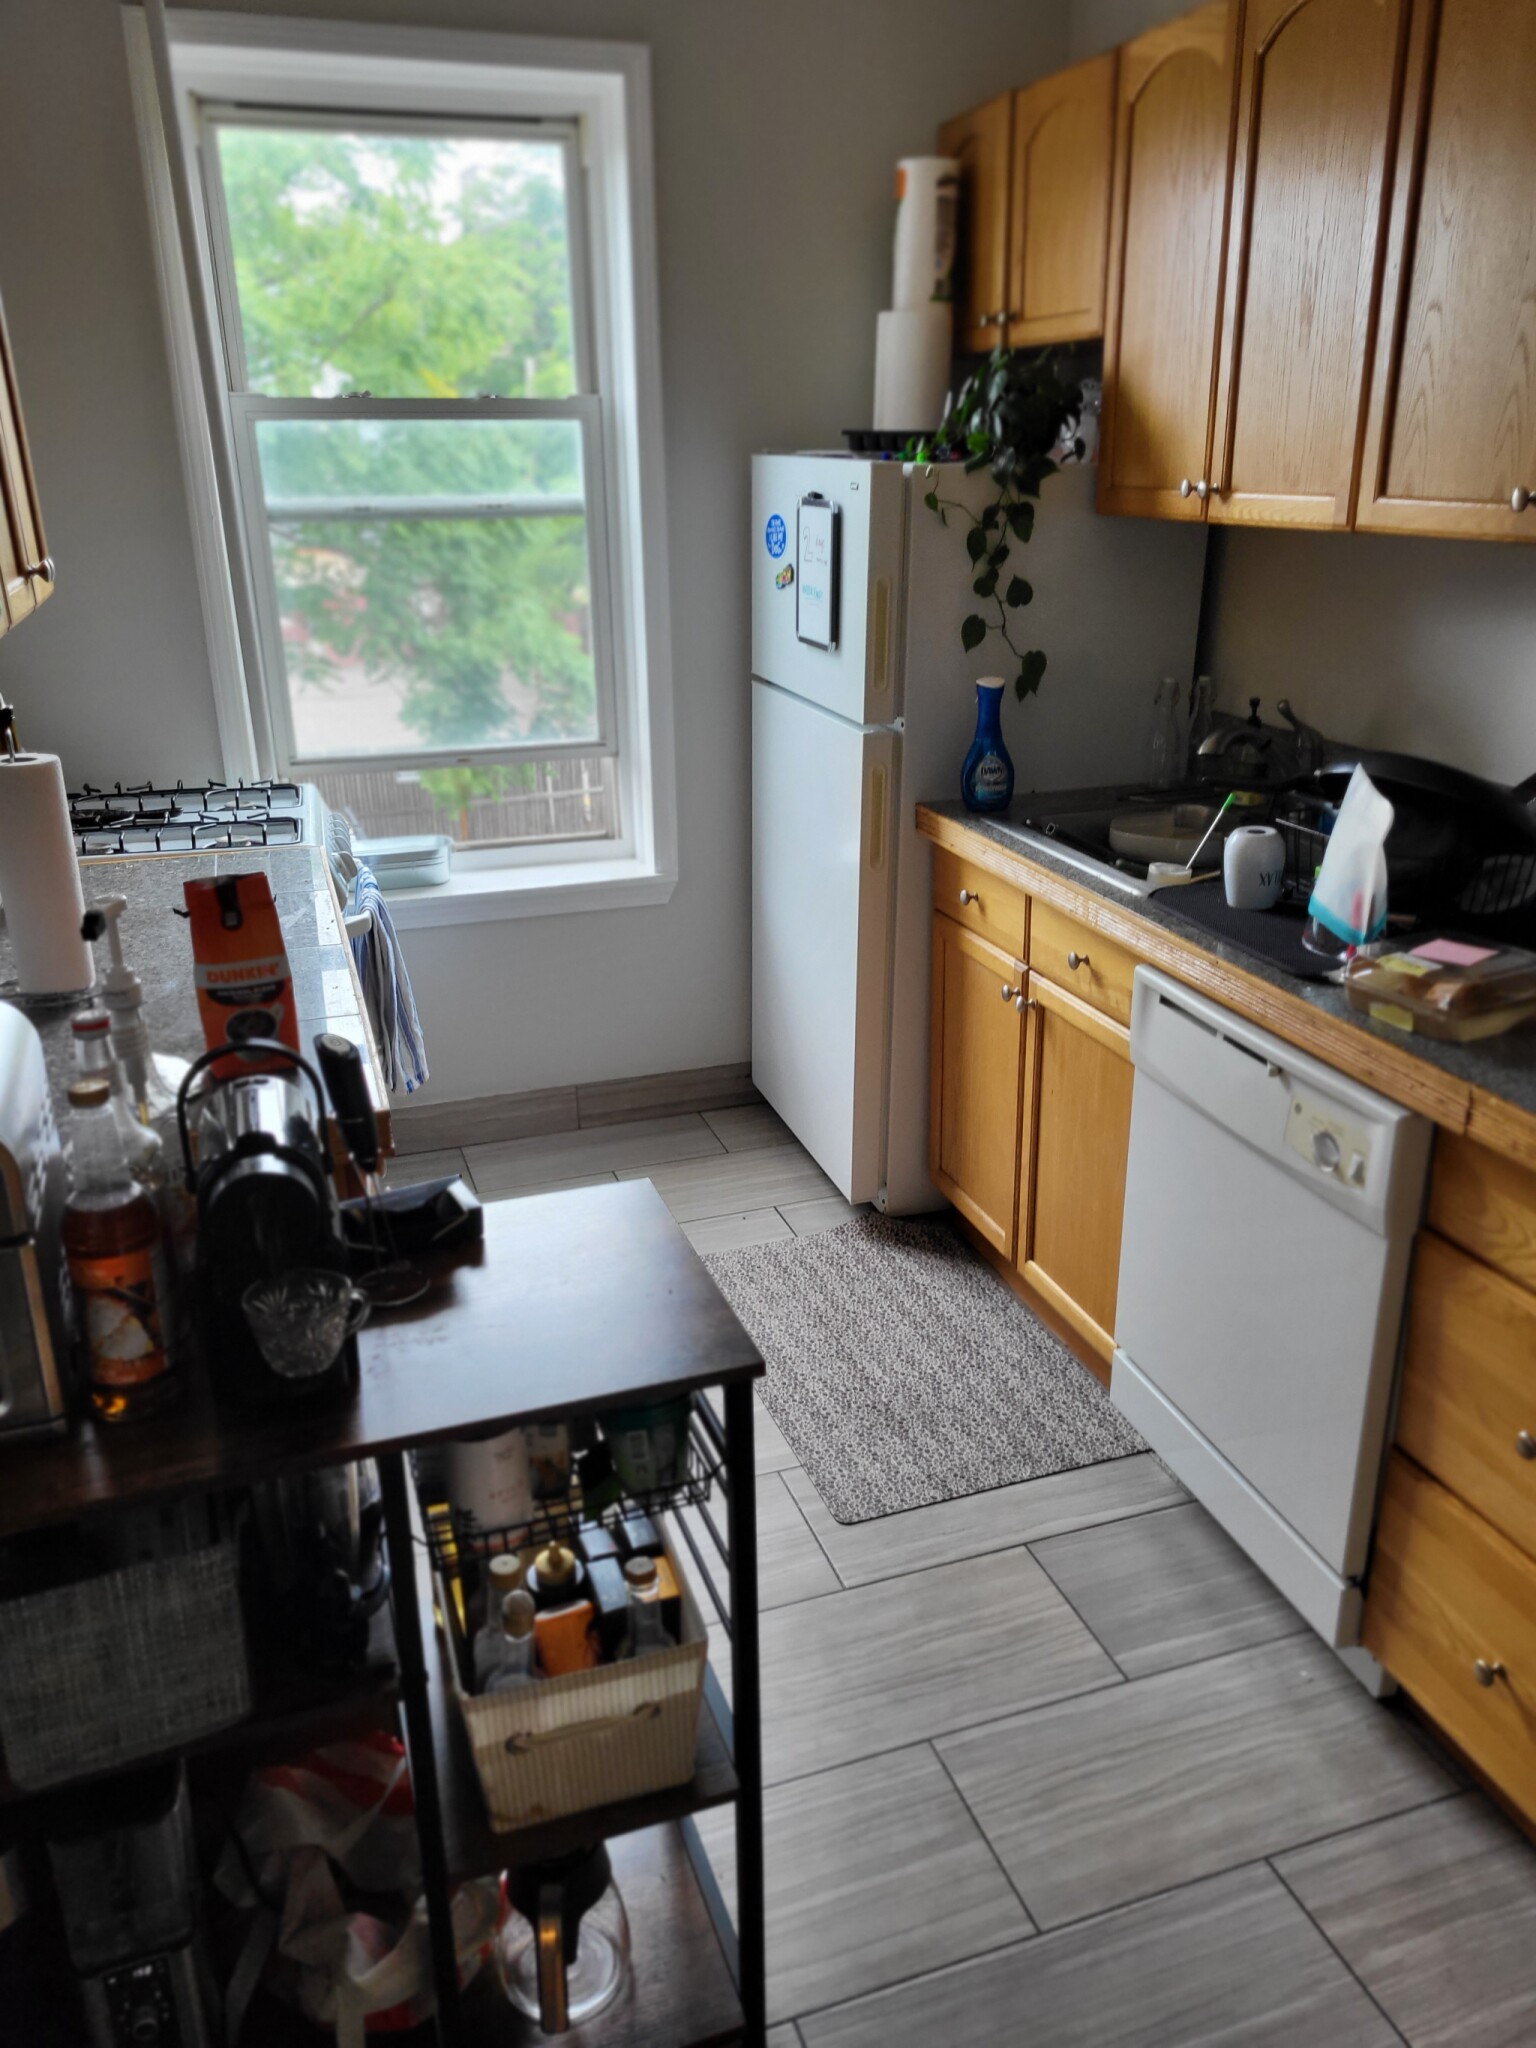 Photos of apartment on Commonwealth,Boston MA 02134